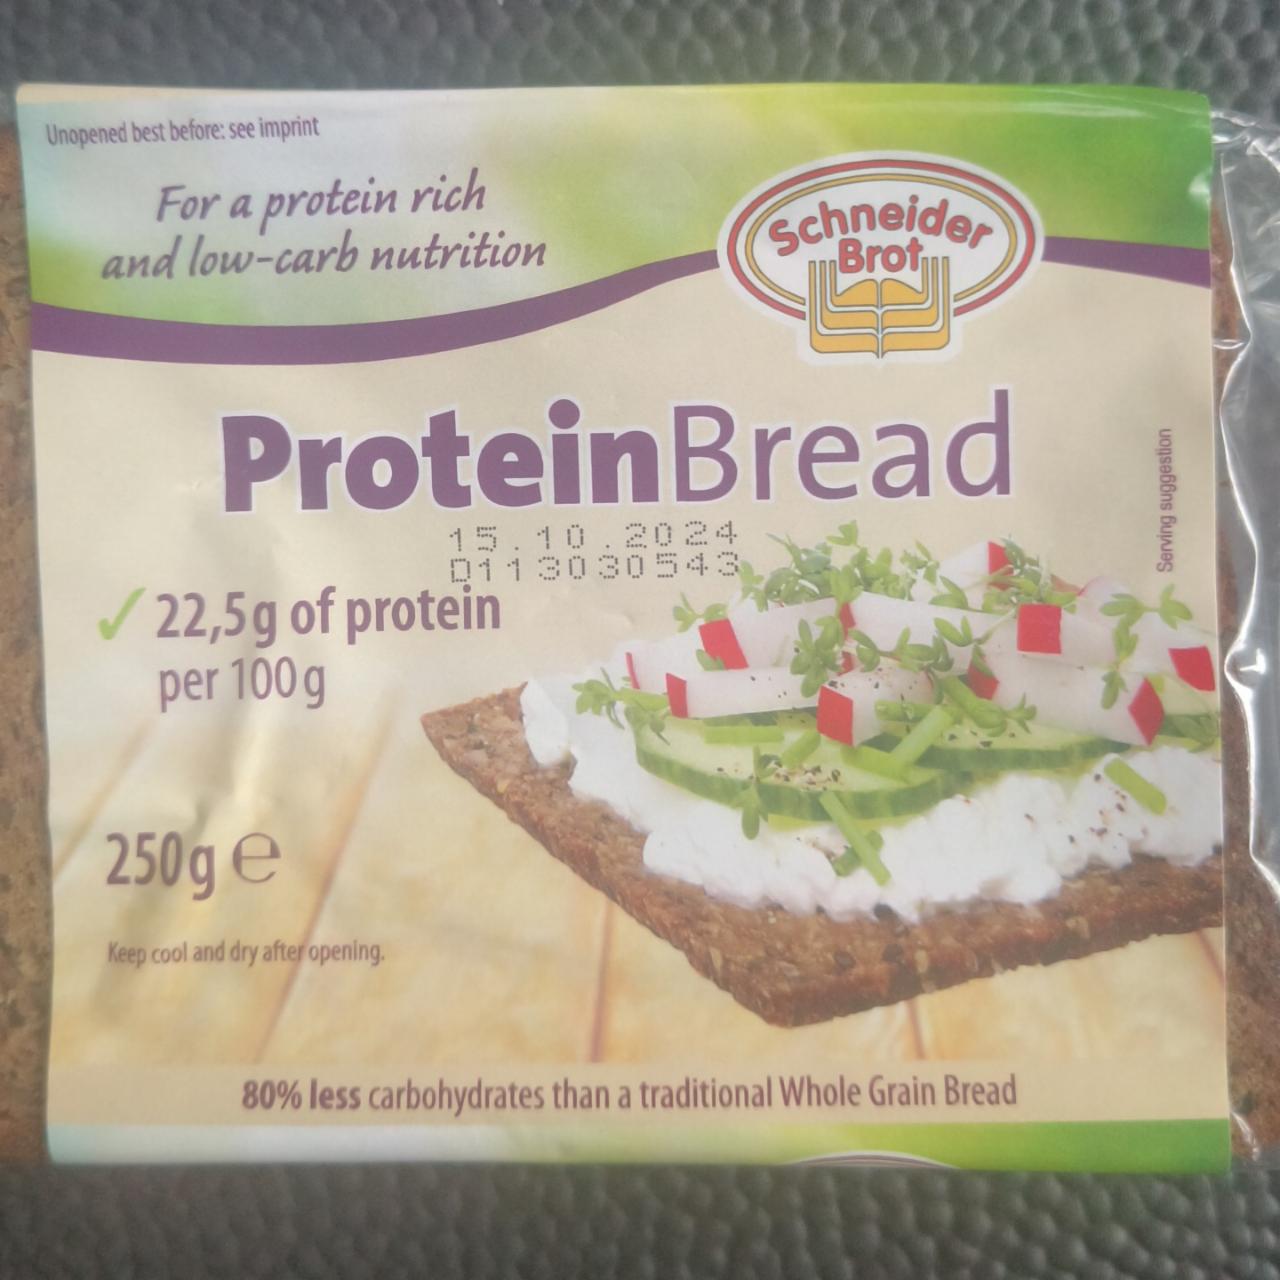 Zdjęcia - Protein Bread Schneider Brot